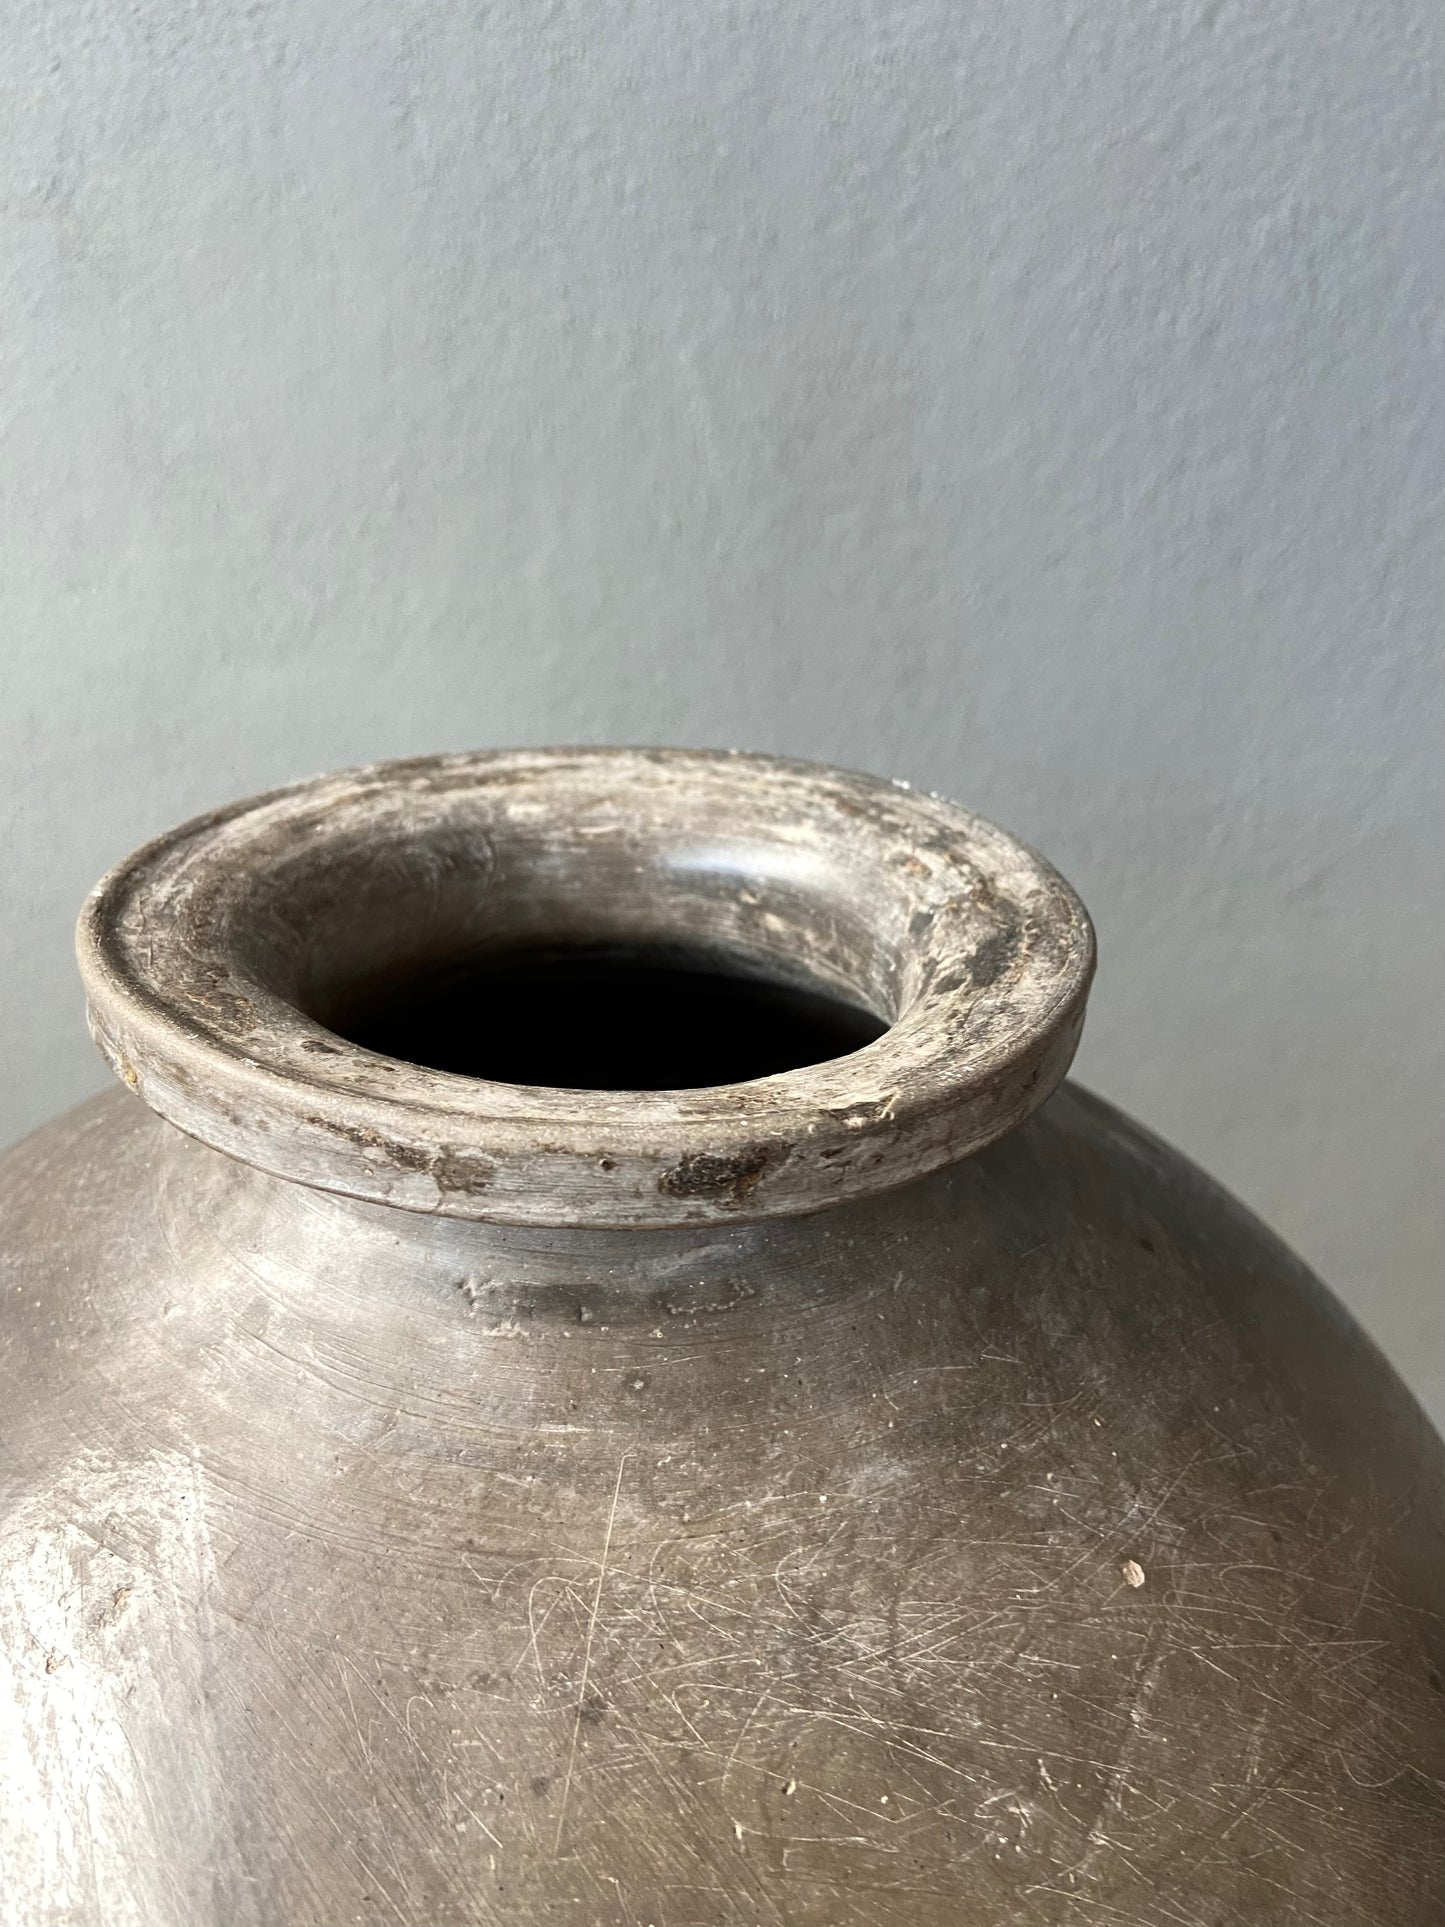 Mezcal jug from Oaxaca